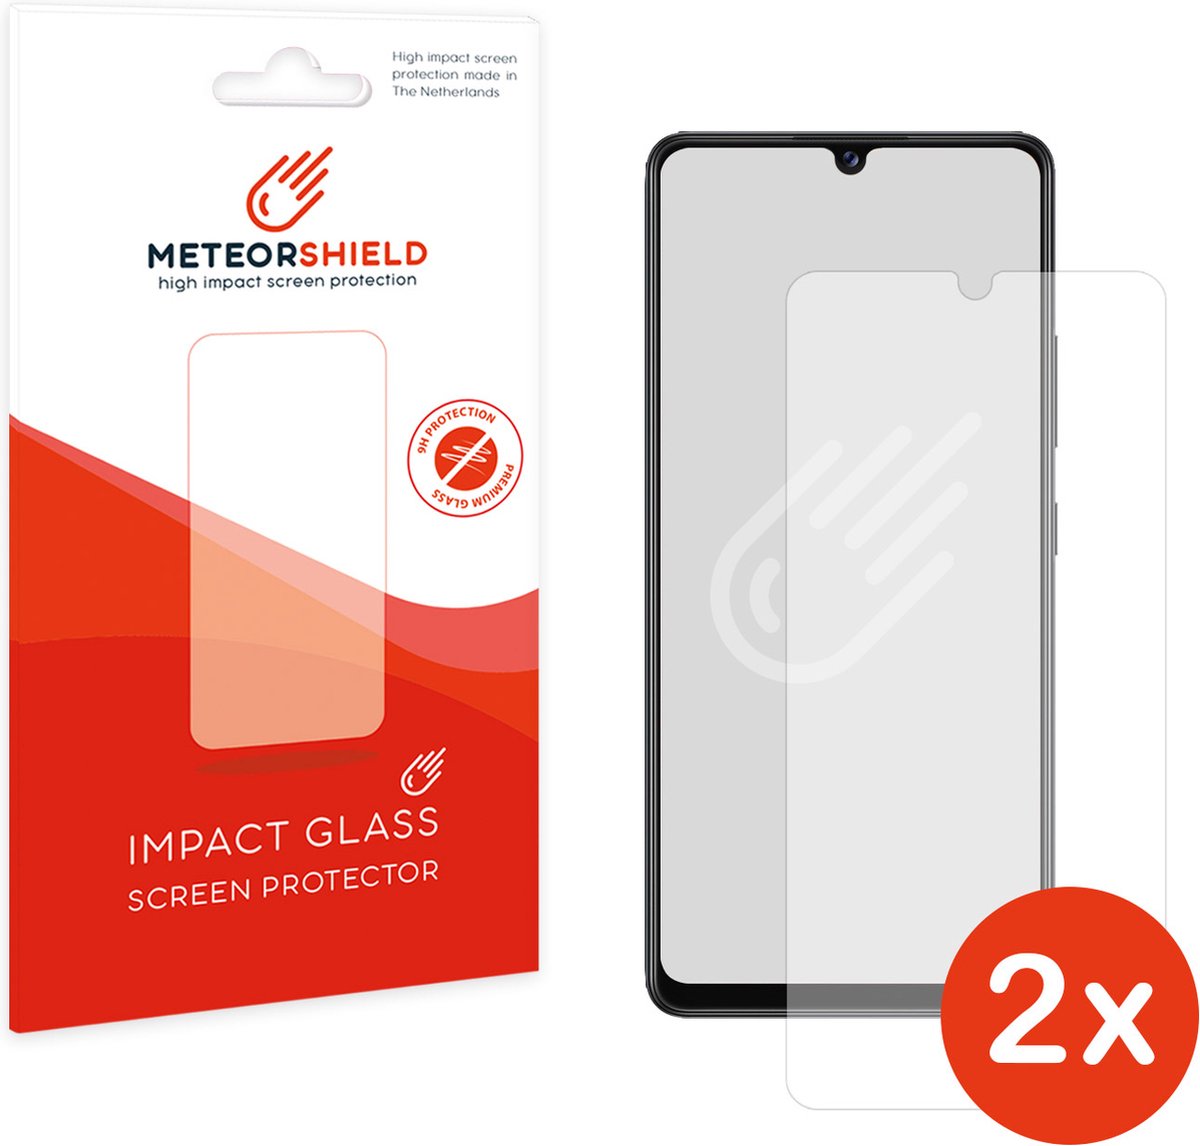 2 stuks: Meteorshield Samsung Galaxy A41 screenprotector - Ultra clear impact glass